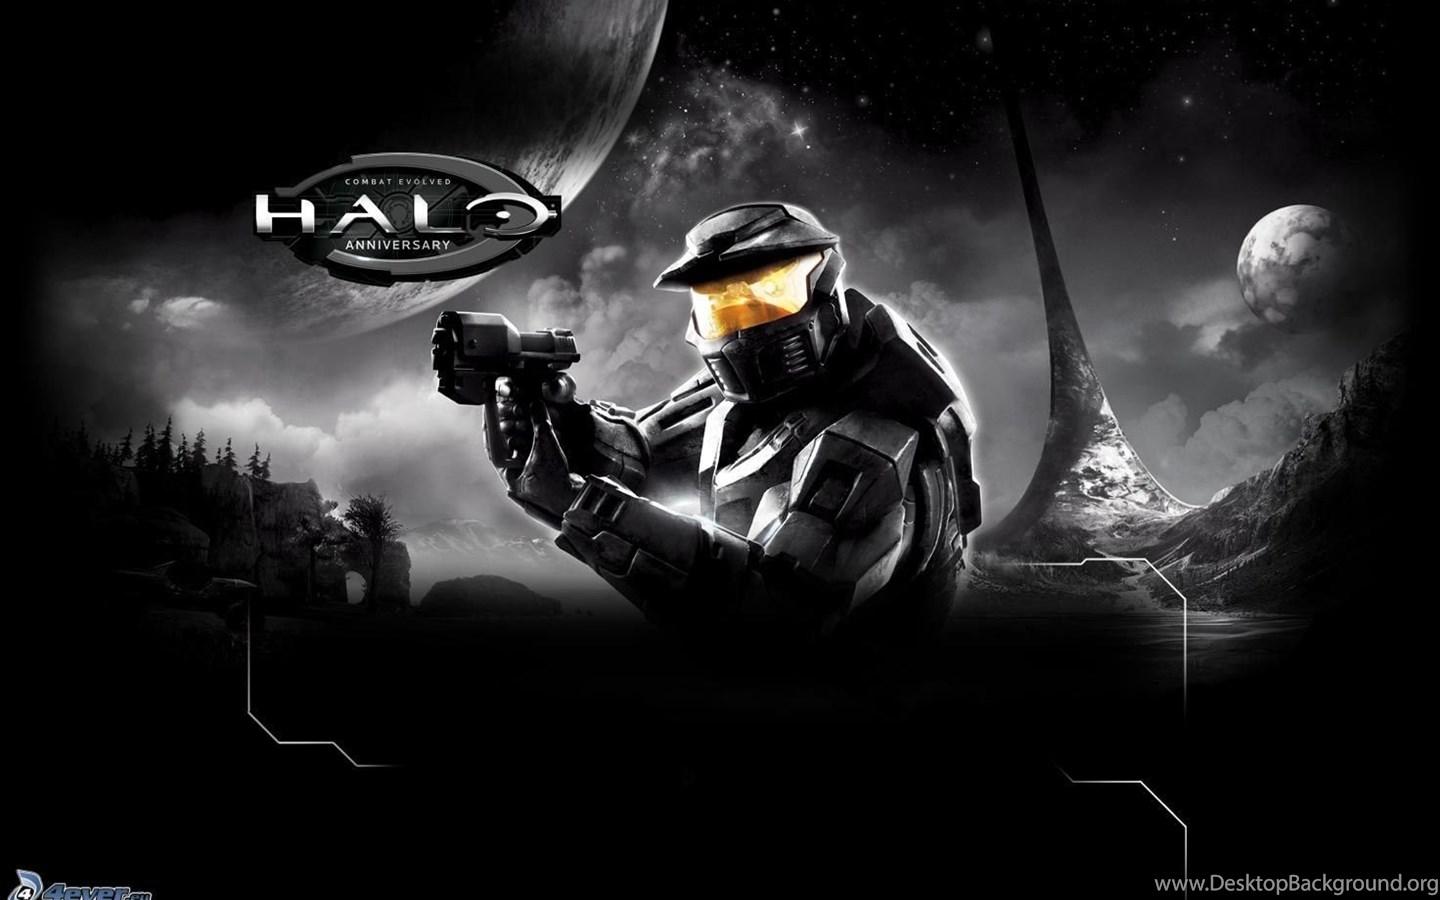 Halo combat evolved anniversary, sci fi soldier Desktop